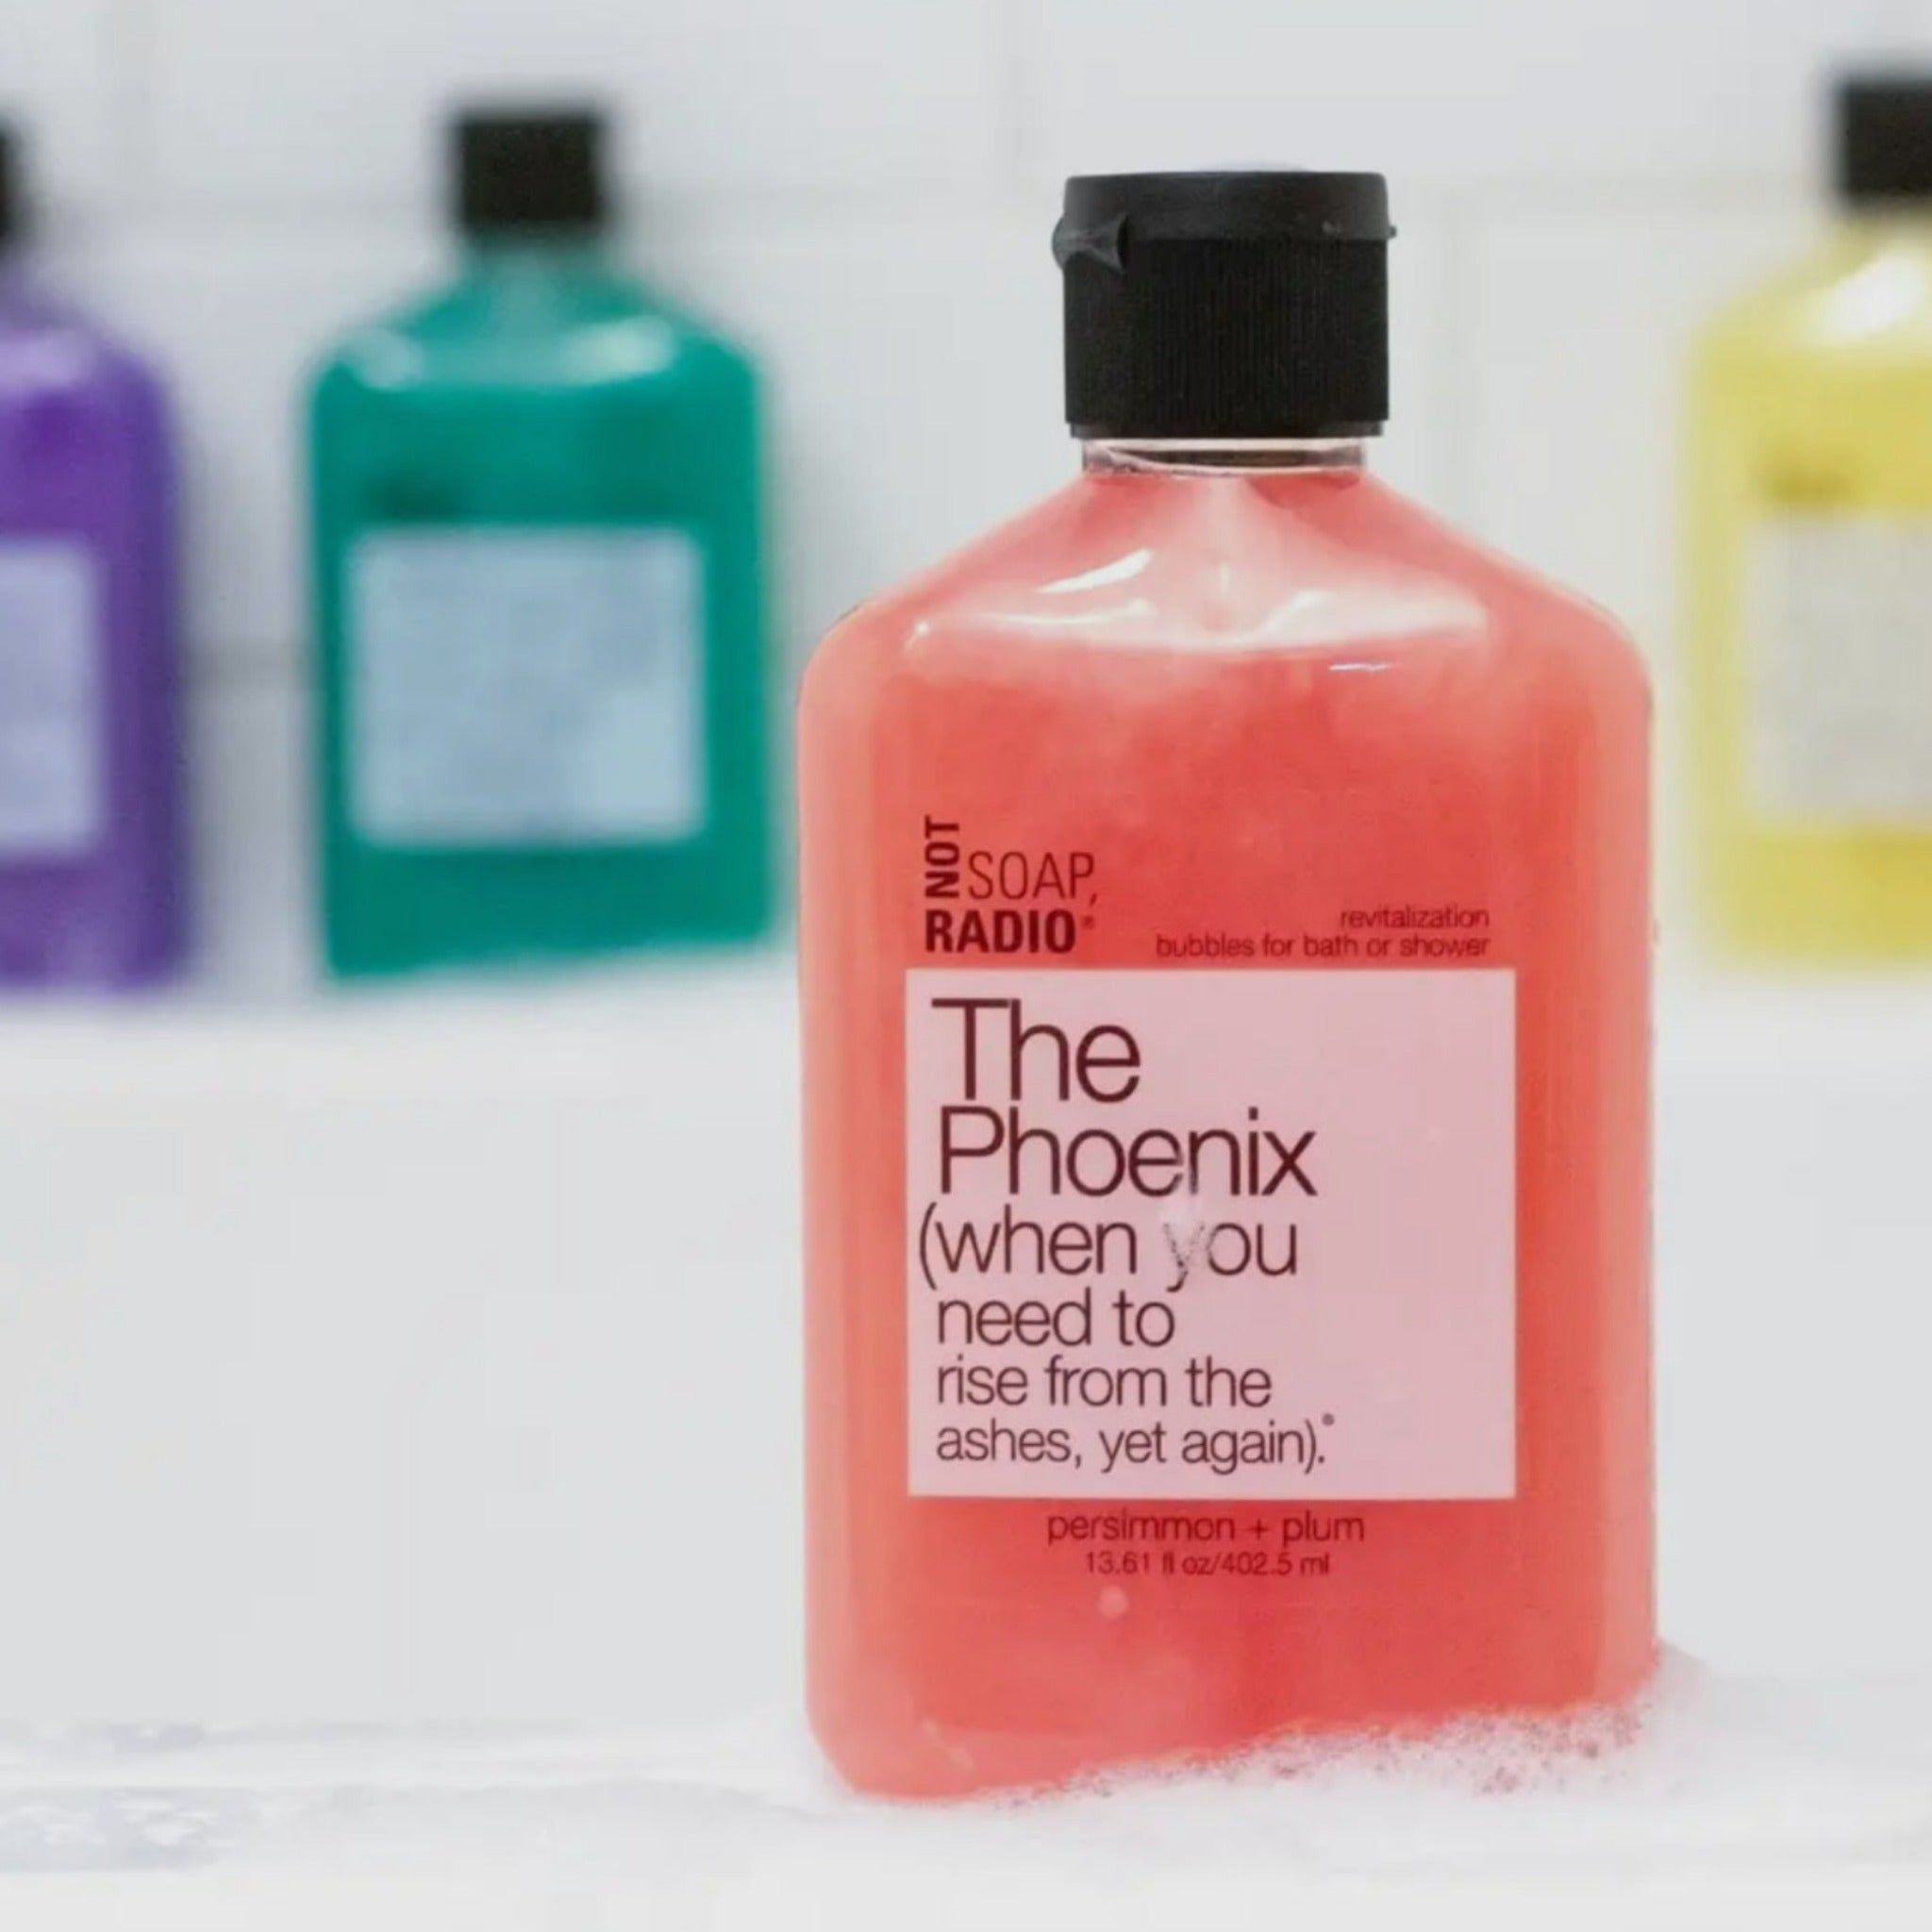 The Phoenix BATH & SHOWER GEL (Persimmon + Plum) Not Soap, Radio